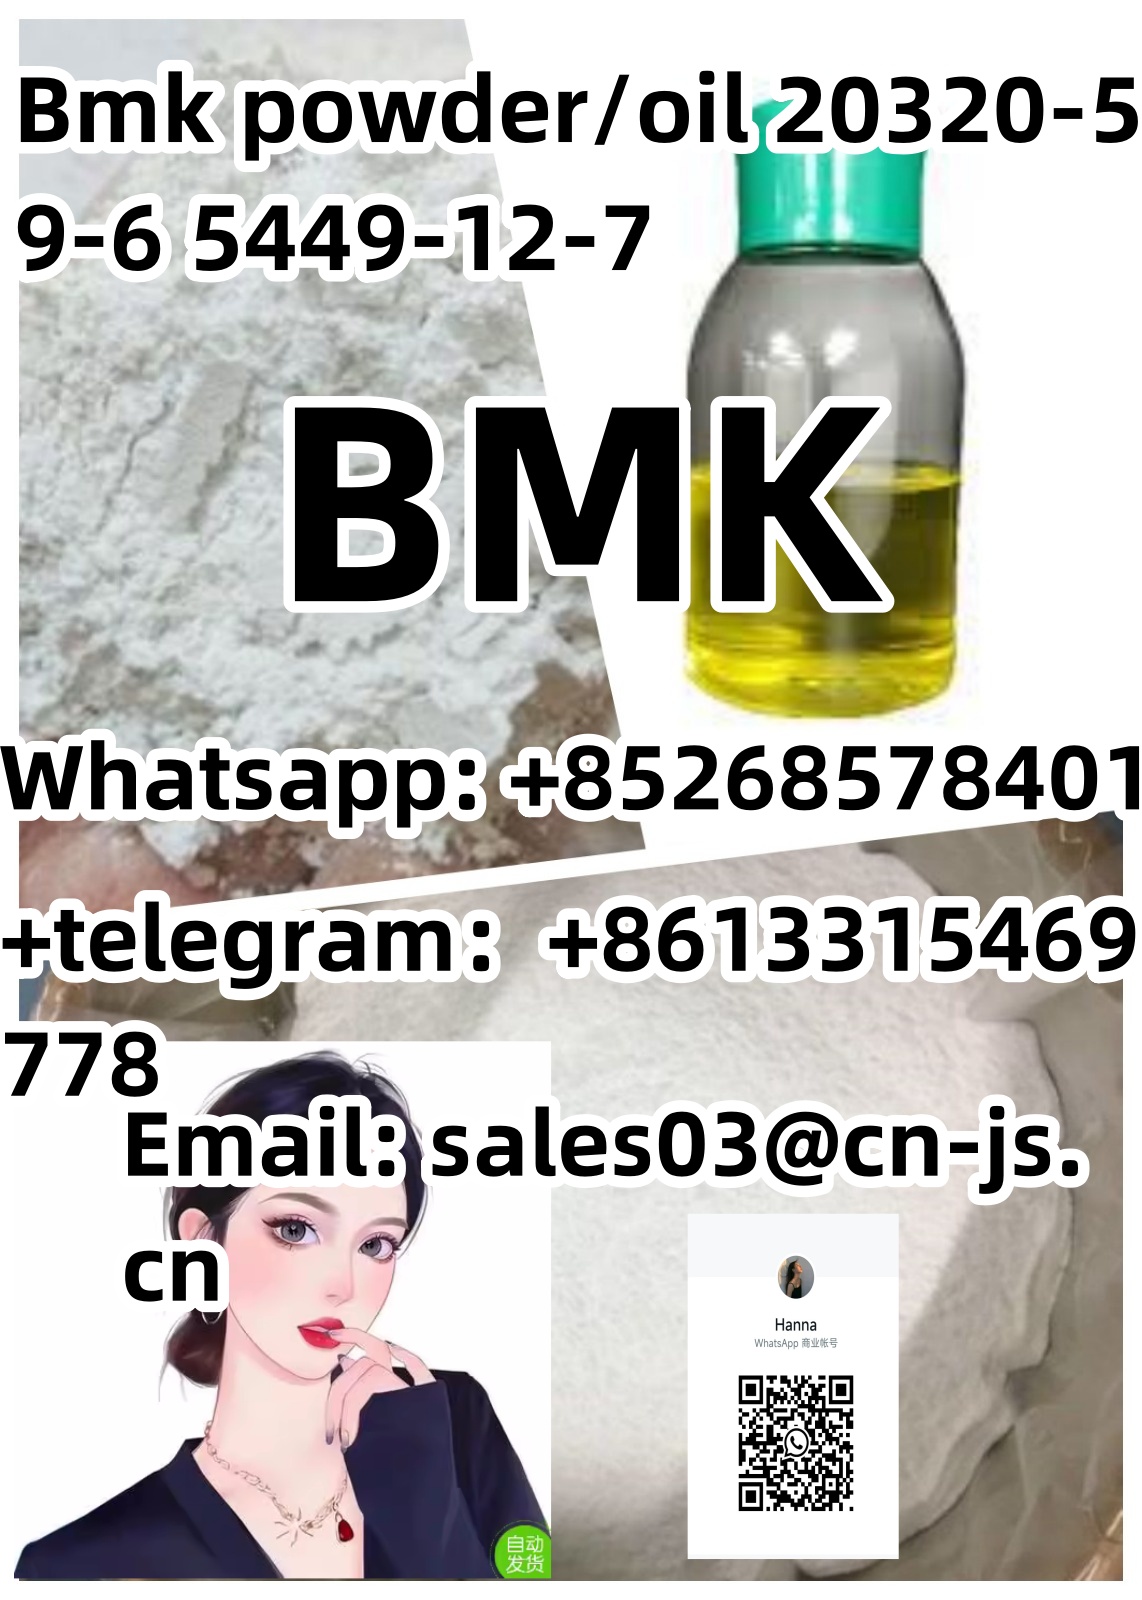 Bmk powder/oil 20320-59-6 5449-12-7,1,Pets,Free Classifieds,Post Free Ads,77traders.com